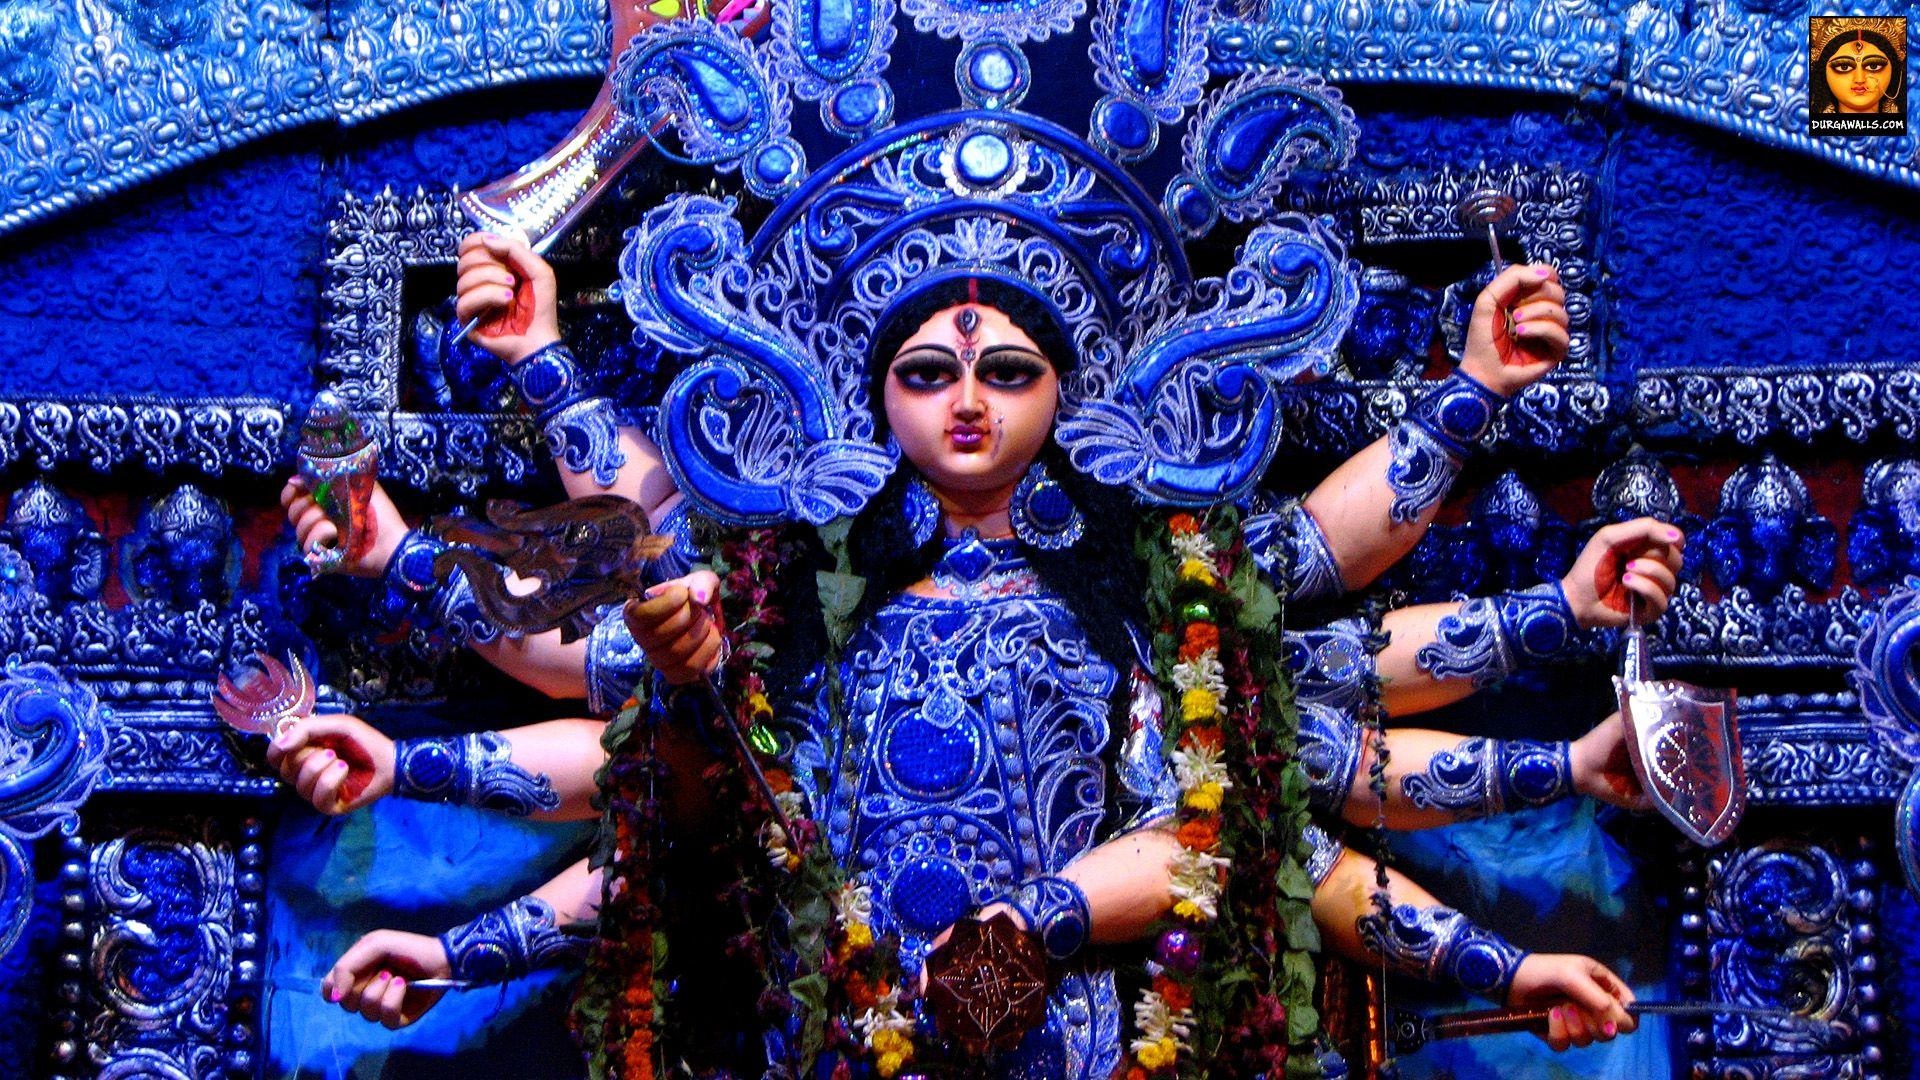 Kali thakur - Durga maa